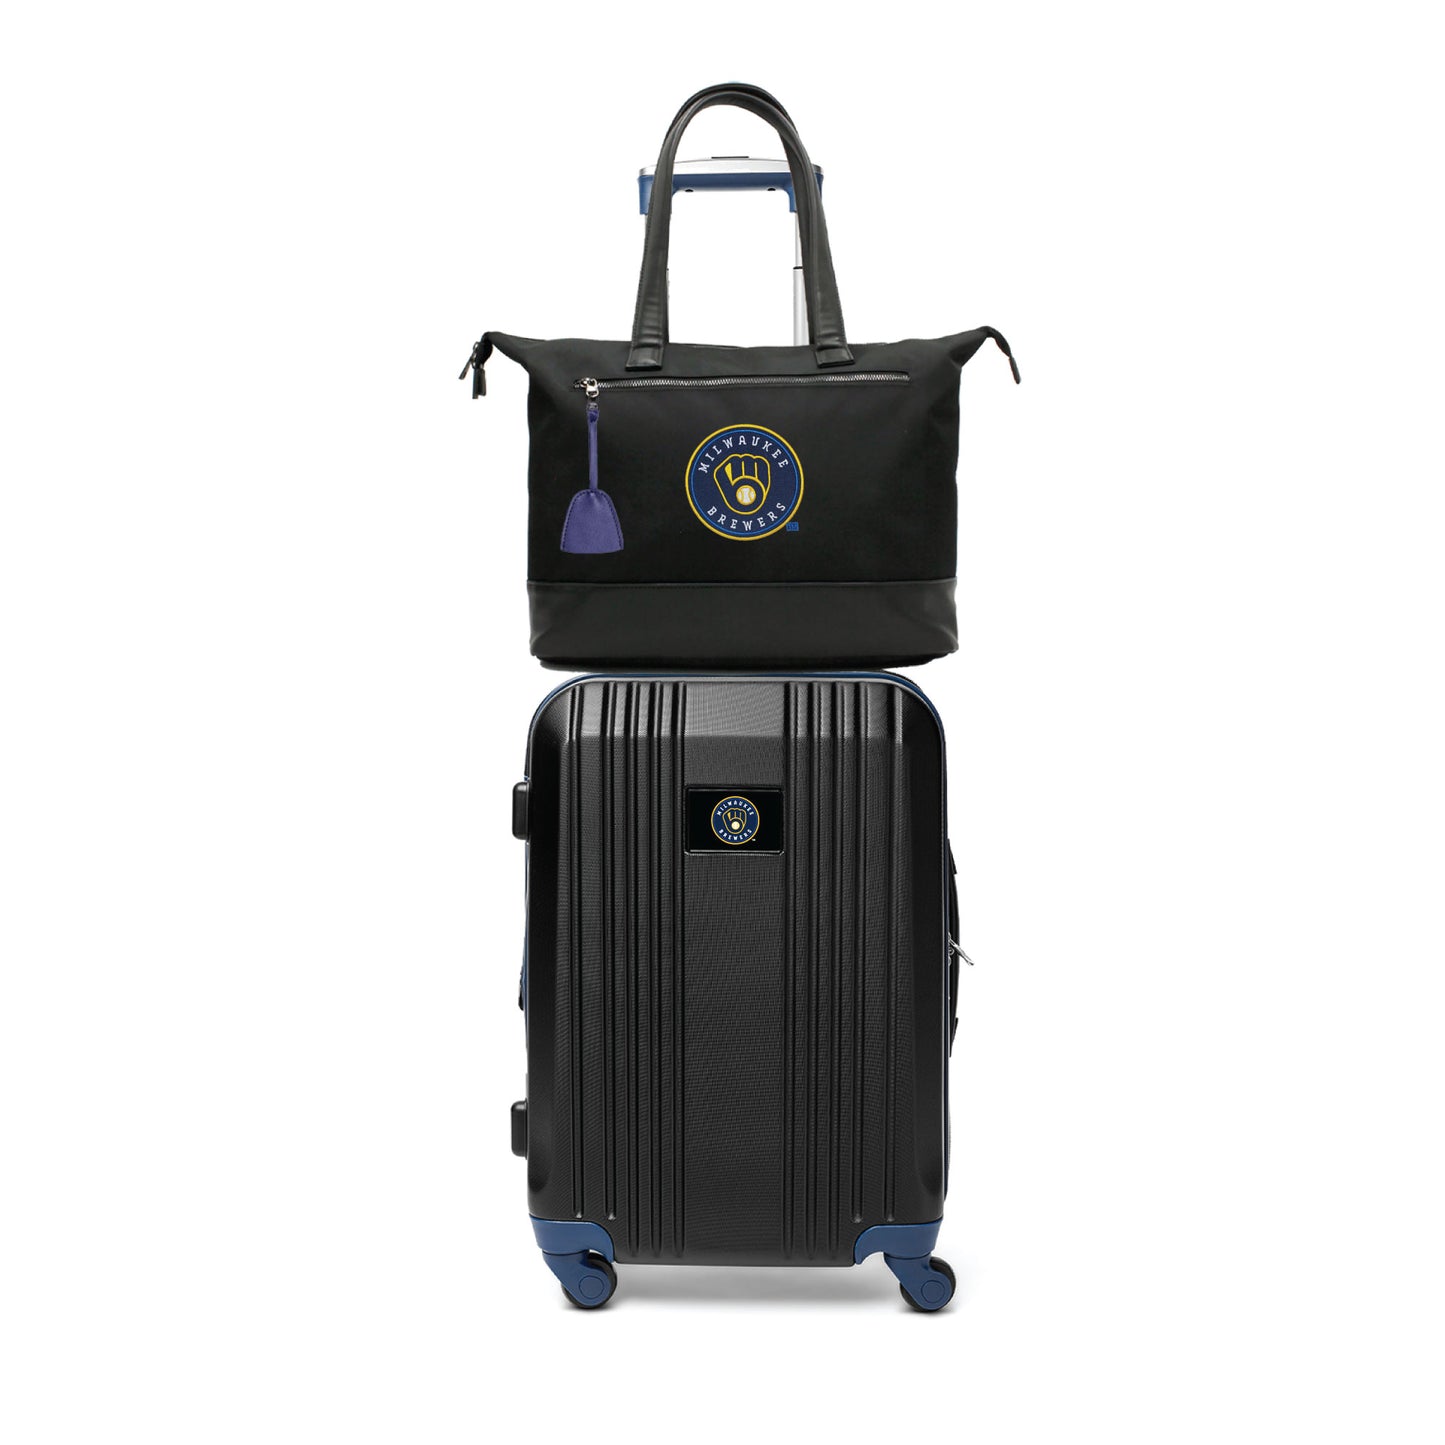 Milwaukee Brewers Premium Laptop Tote Bag and Luggage Set